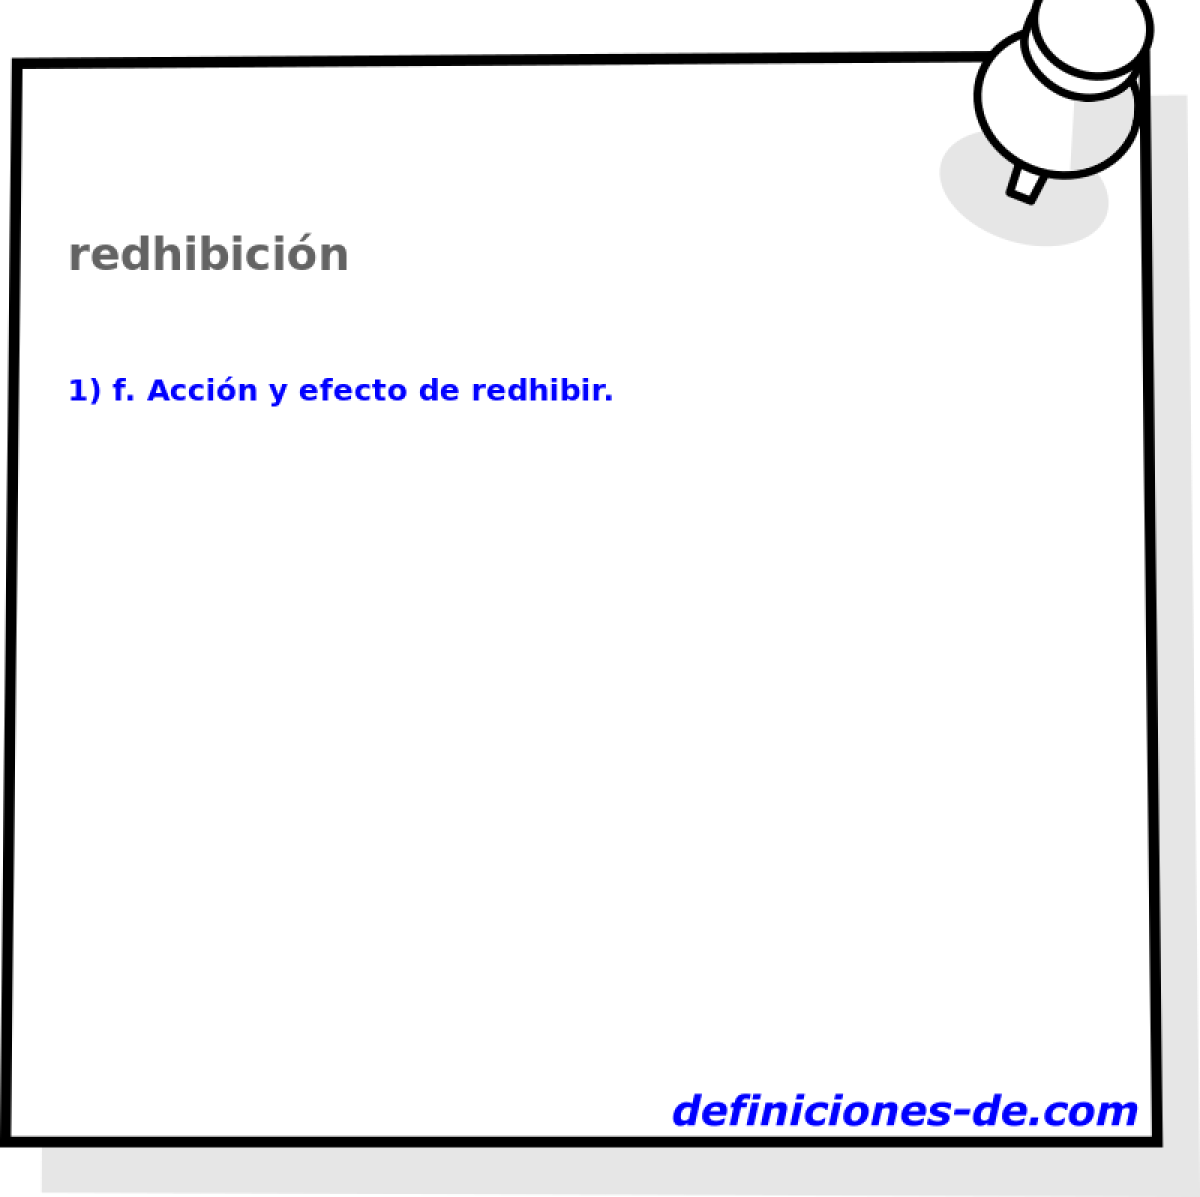 redhibicin 